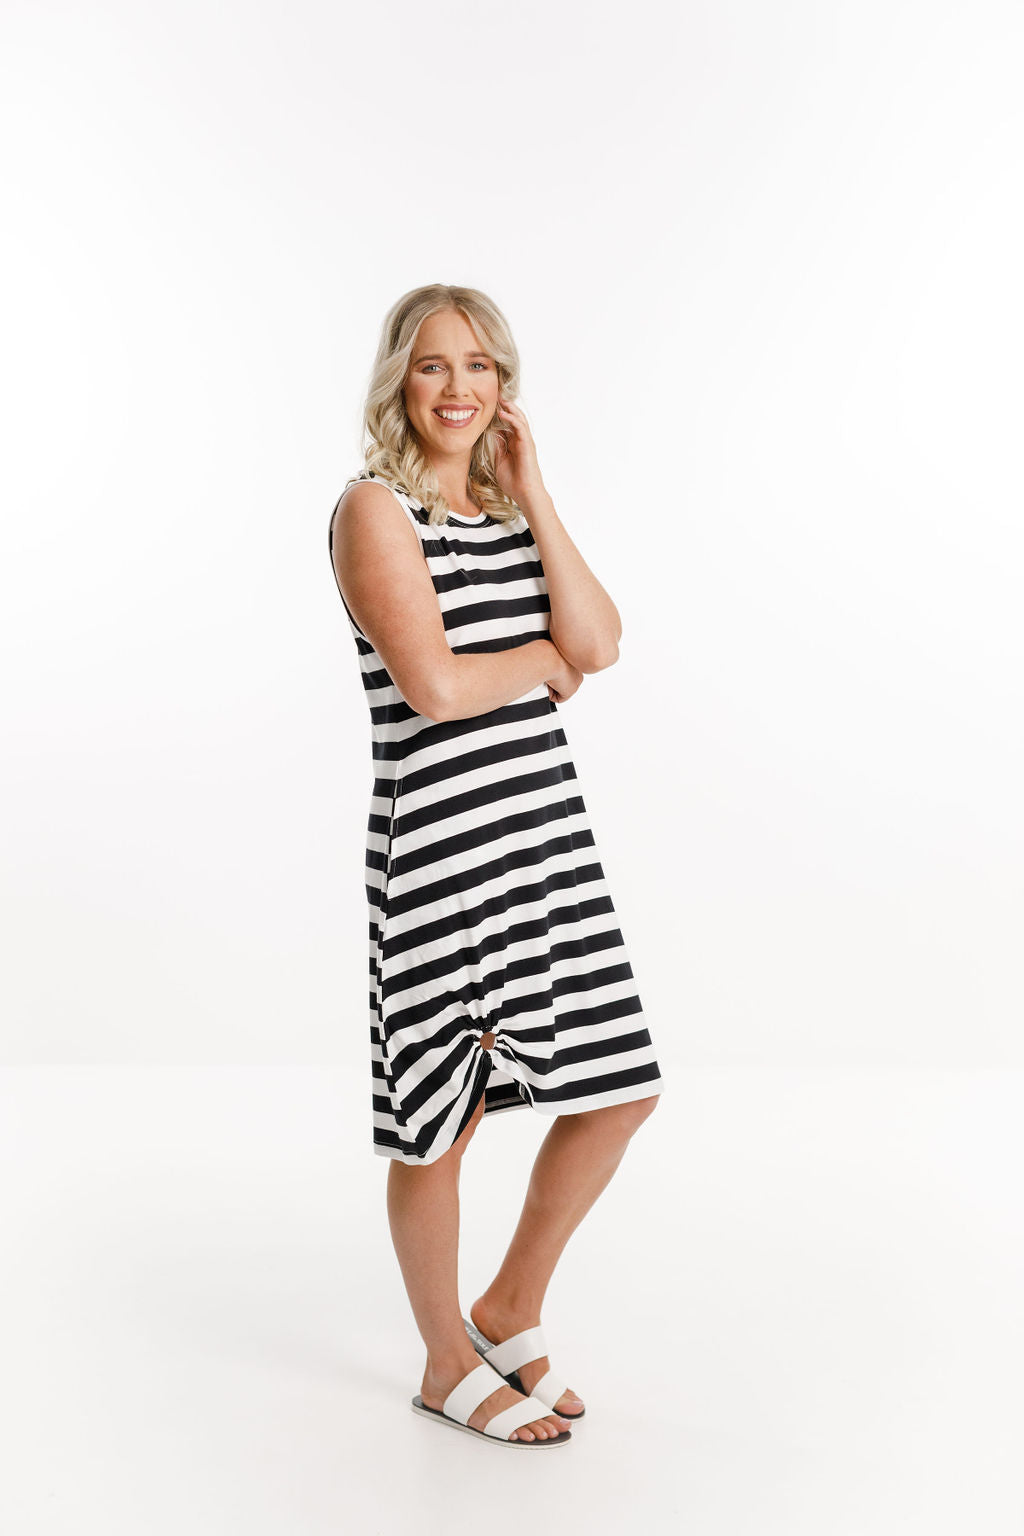 Jane Singlet Dress - Sale - Black and White Stripes